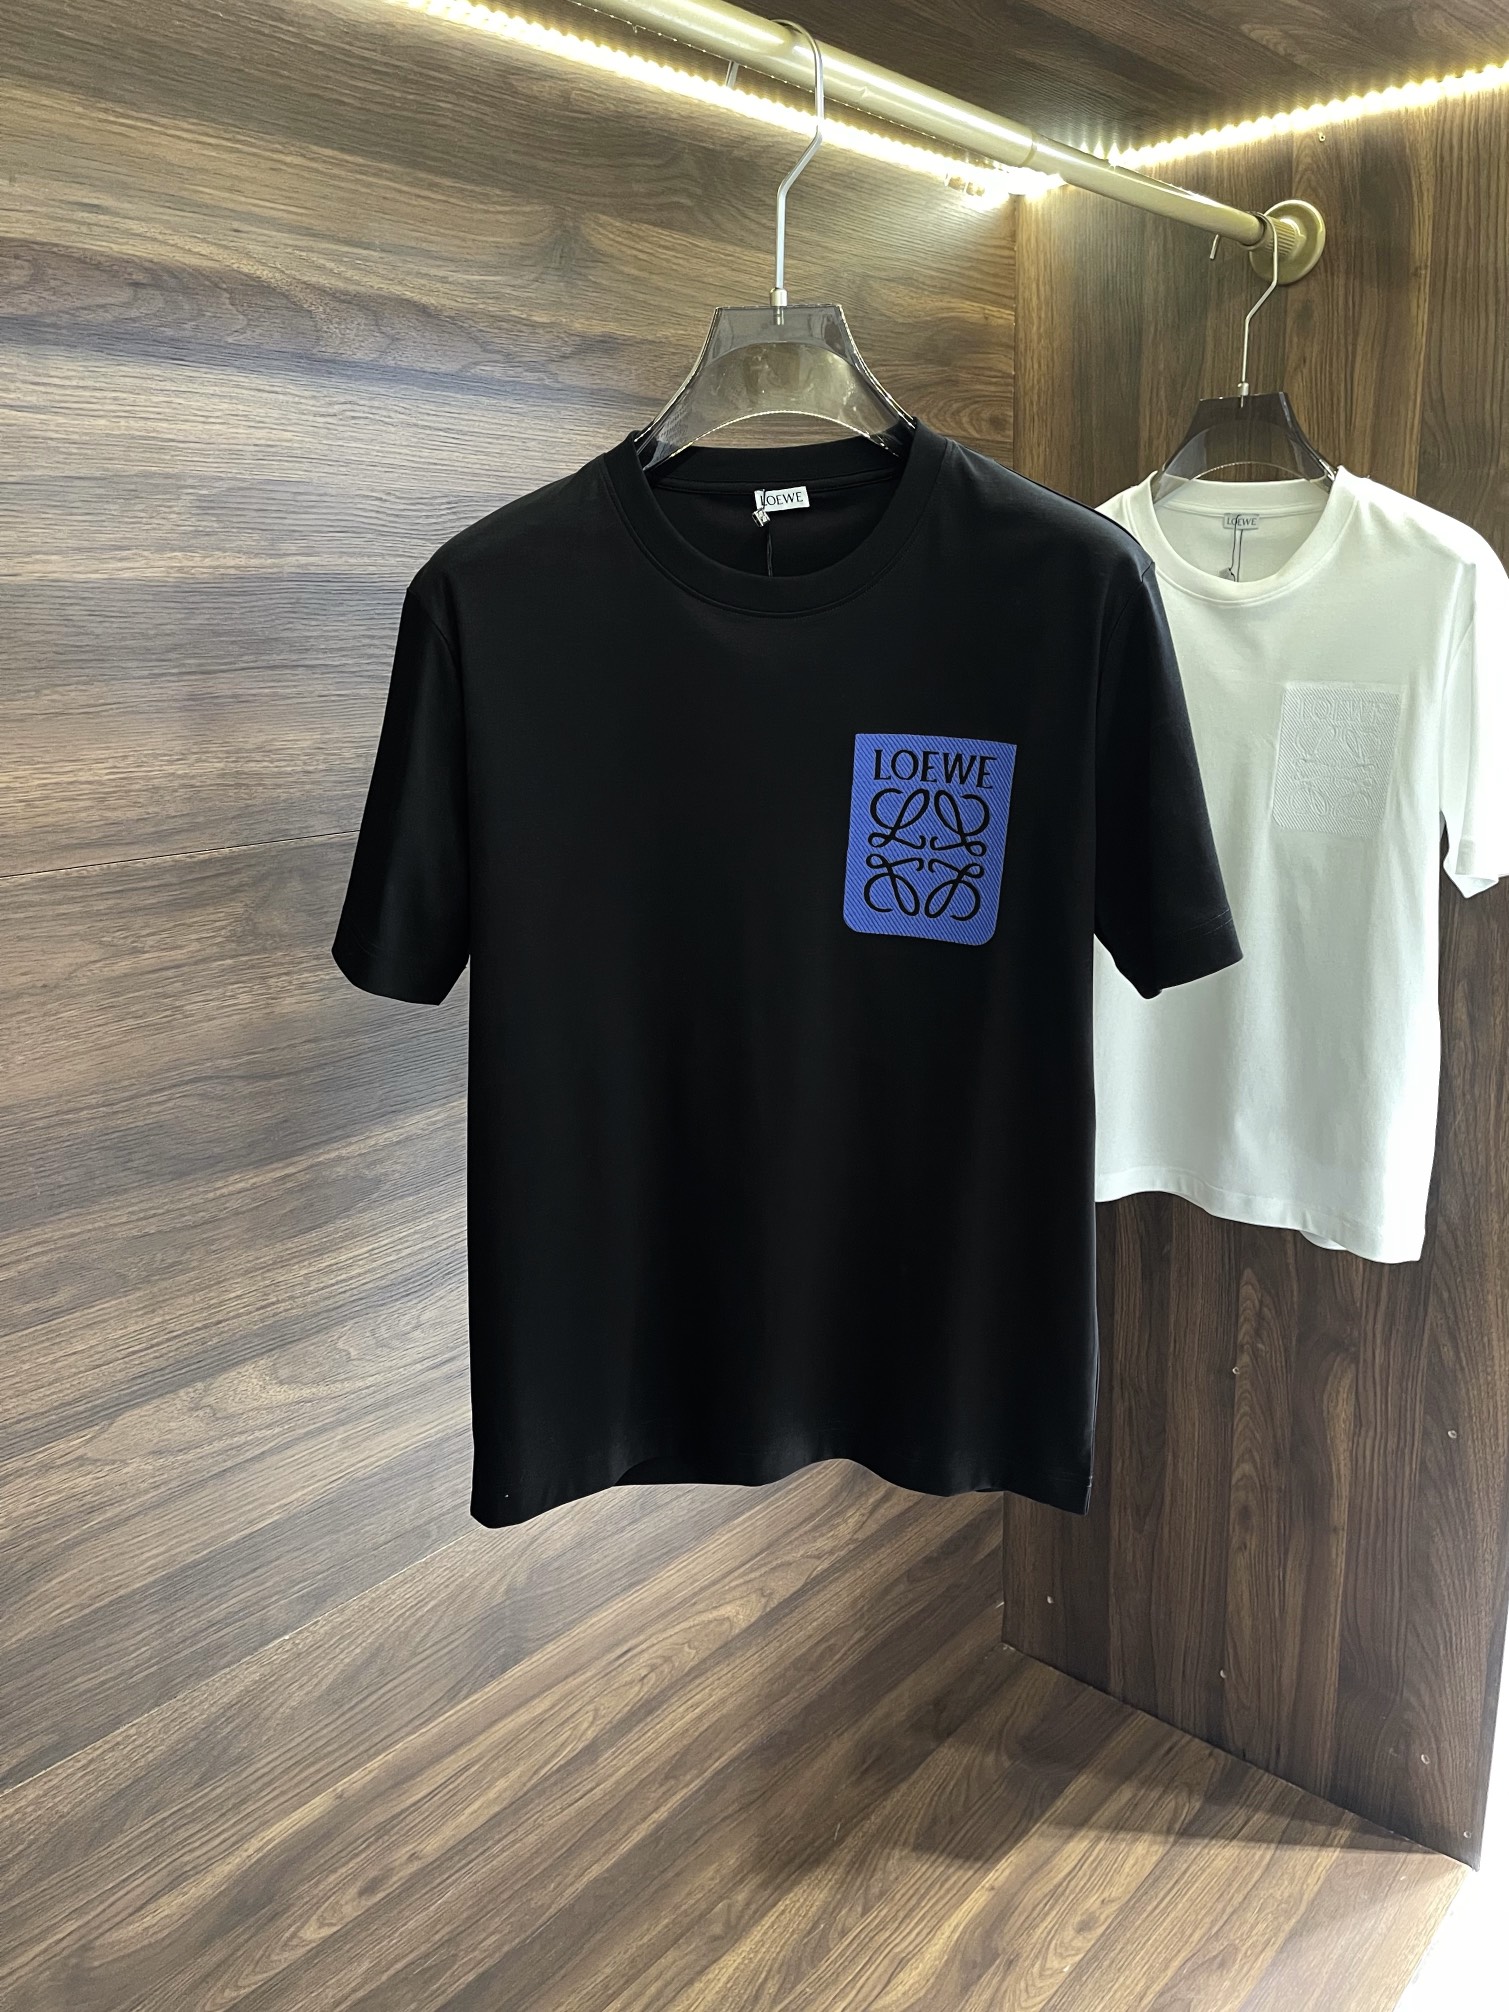 Loewe Clothing T-Shirt Black White Men Fashion Short Sleeve